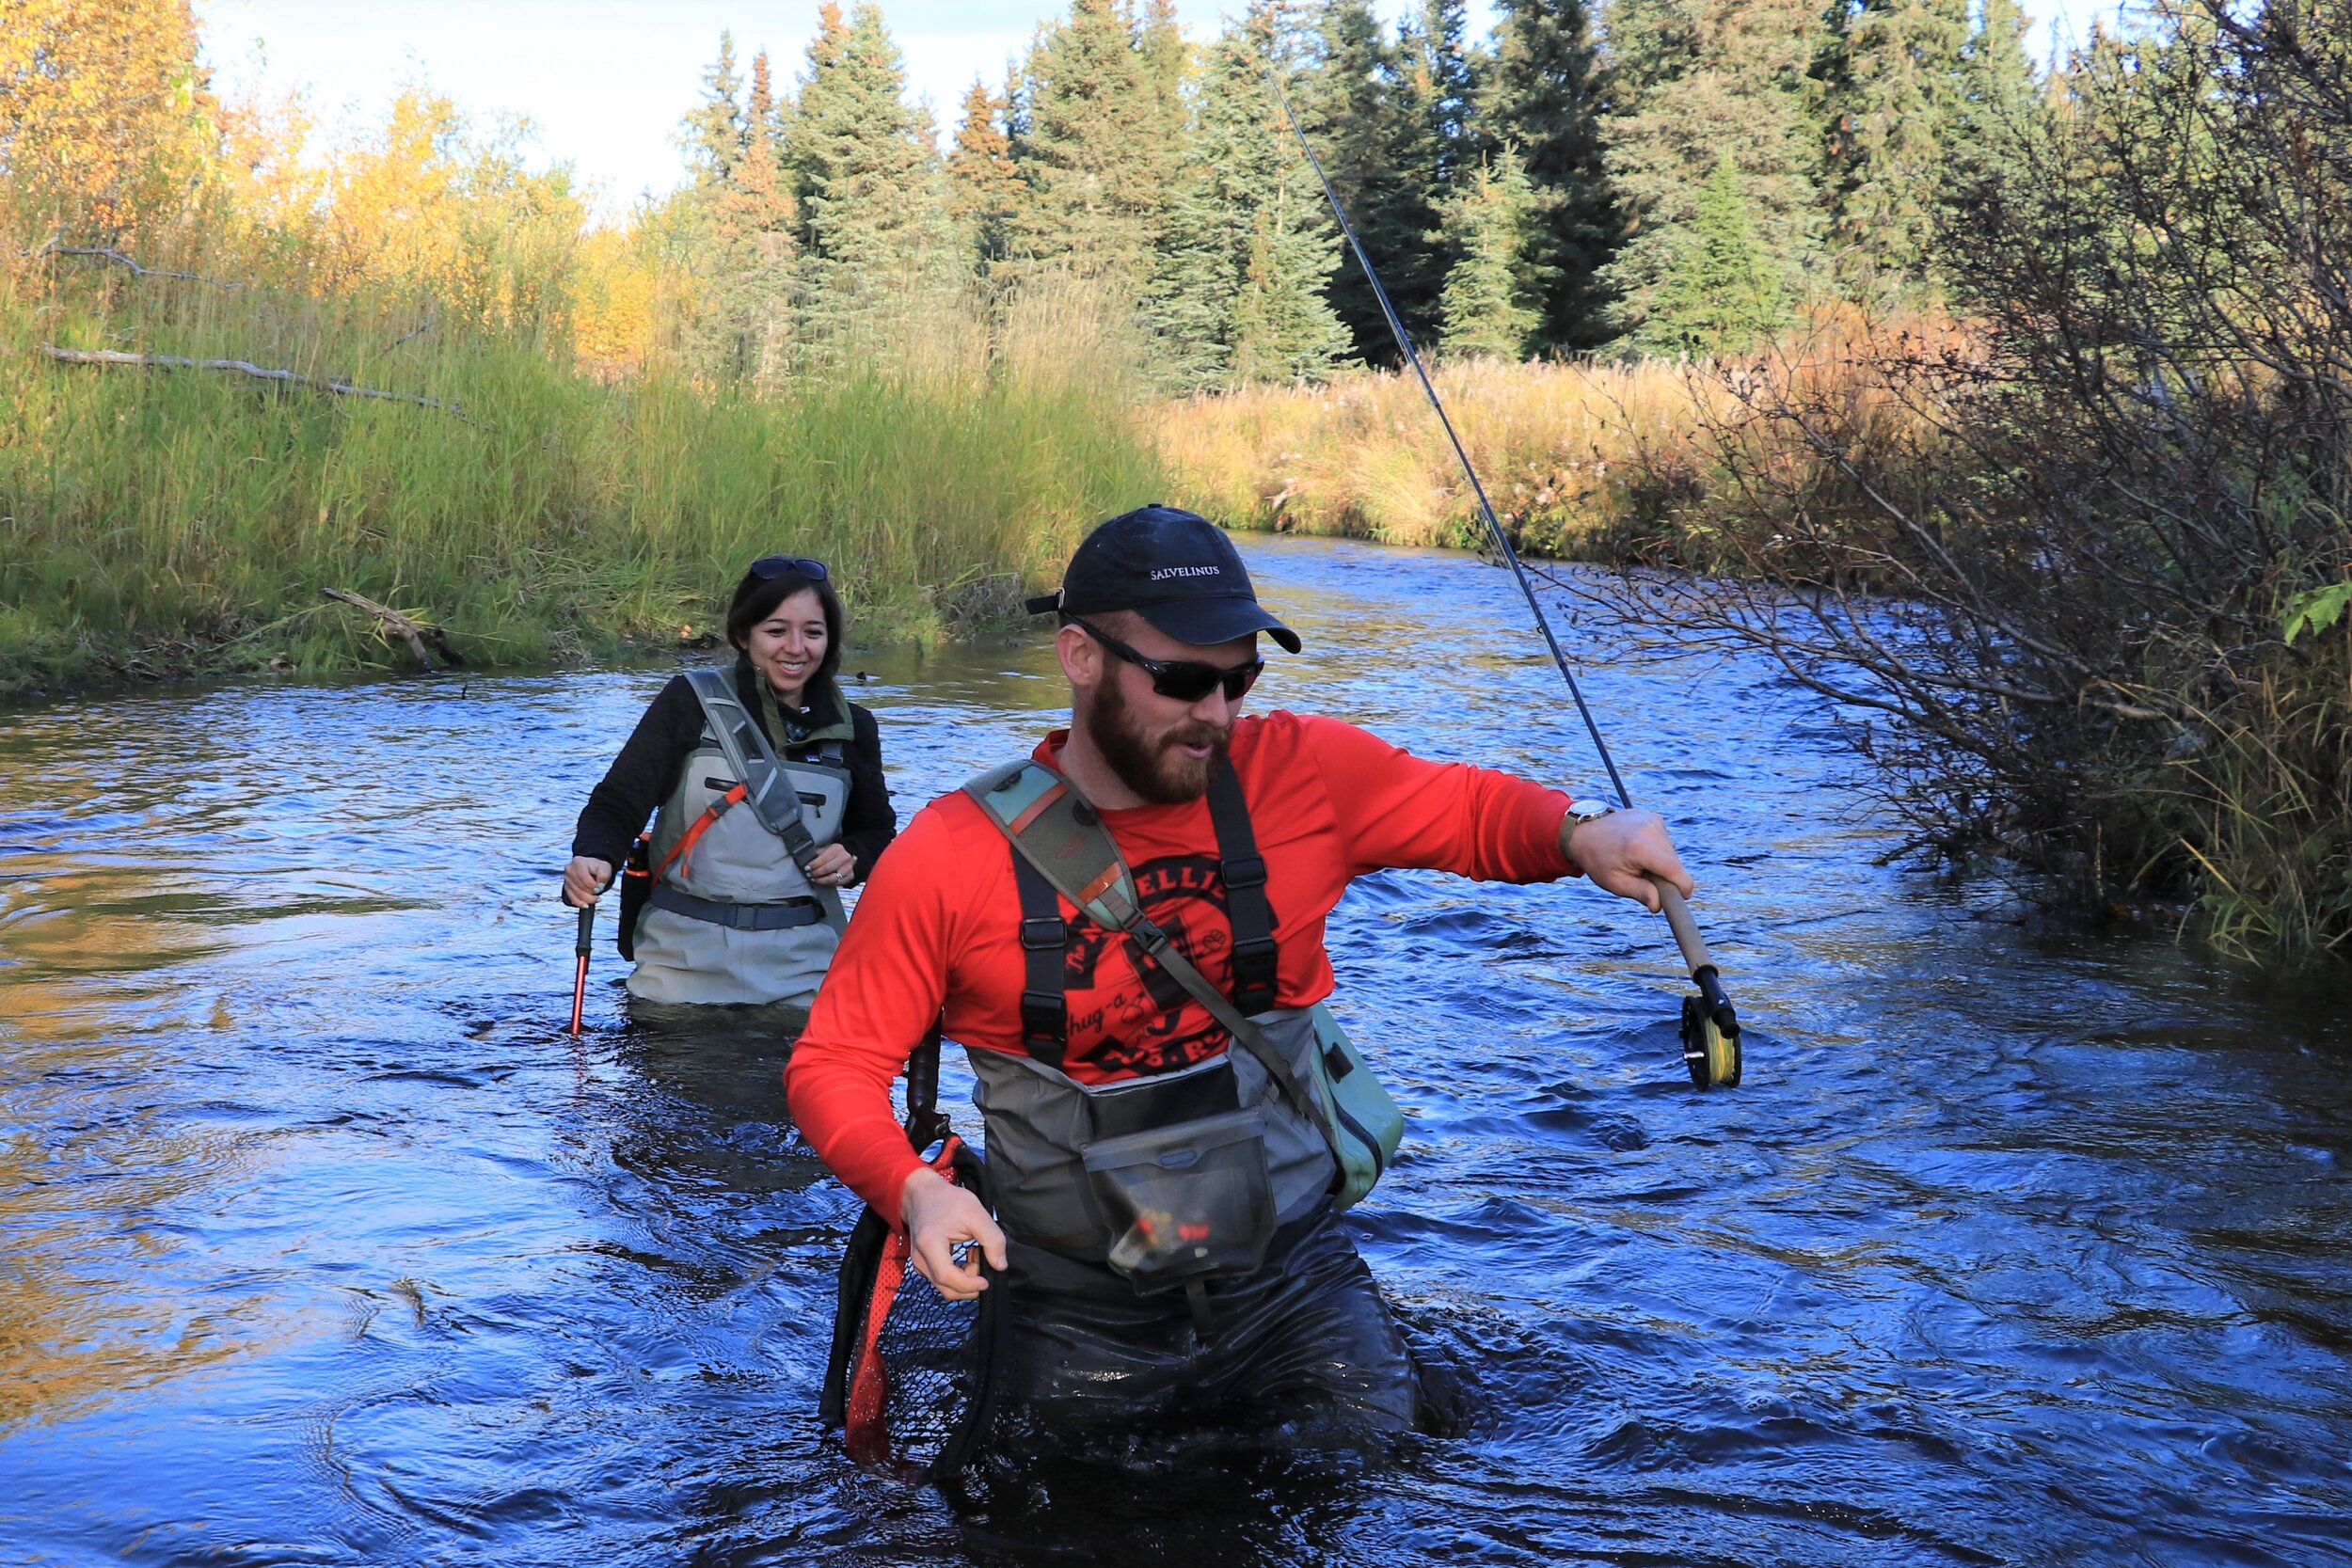  Kyle and Jerissa wading through a small Alaskan stream 